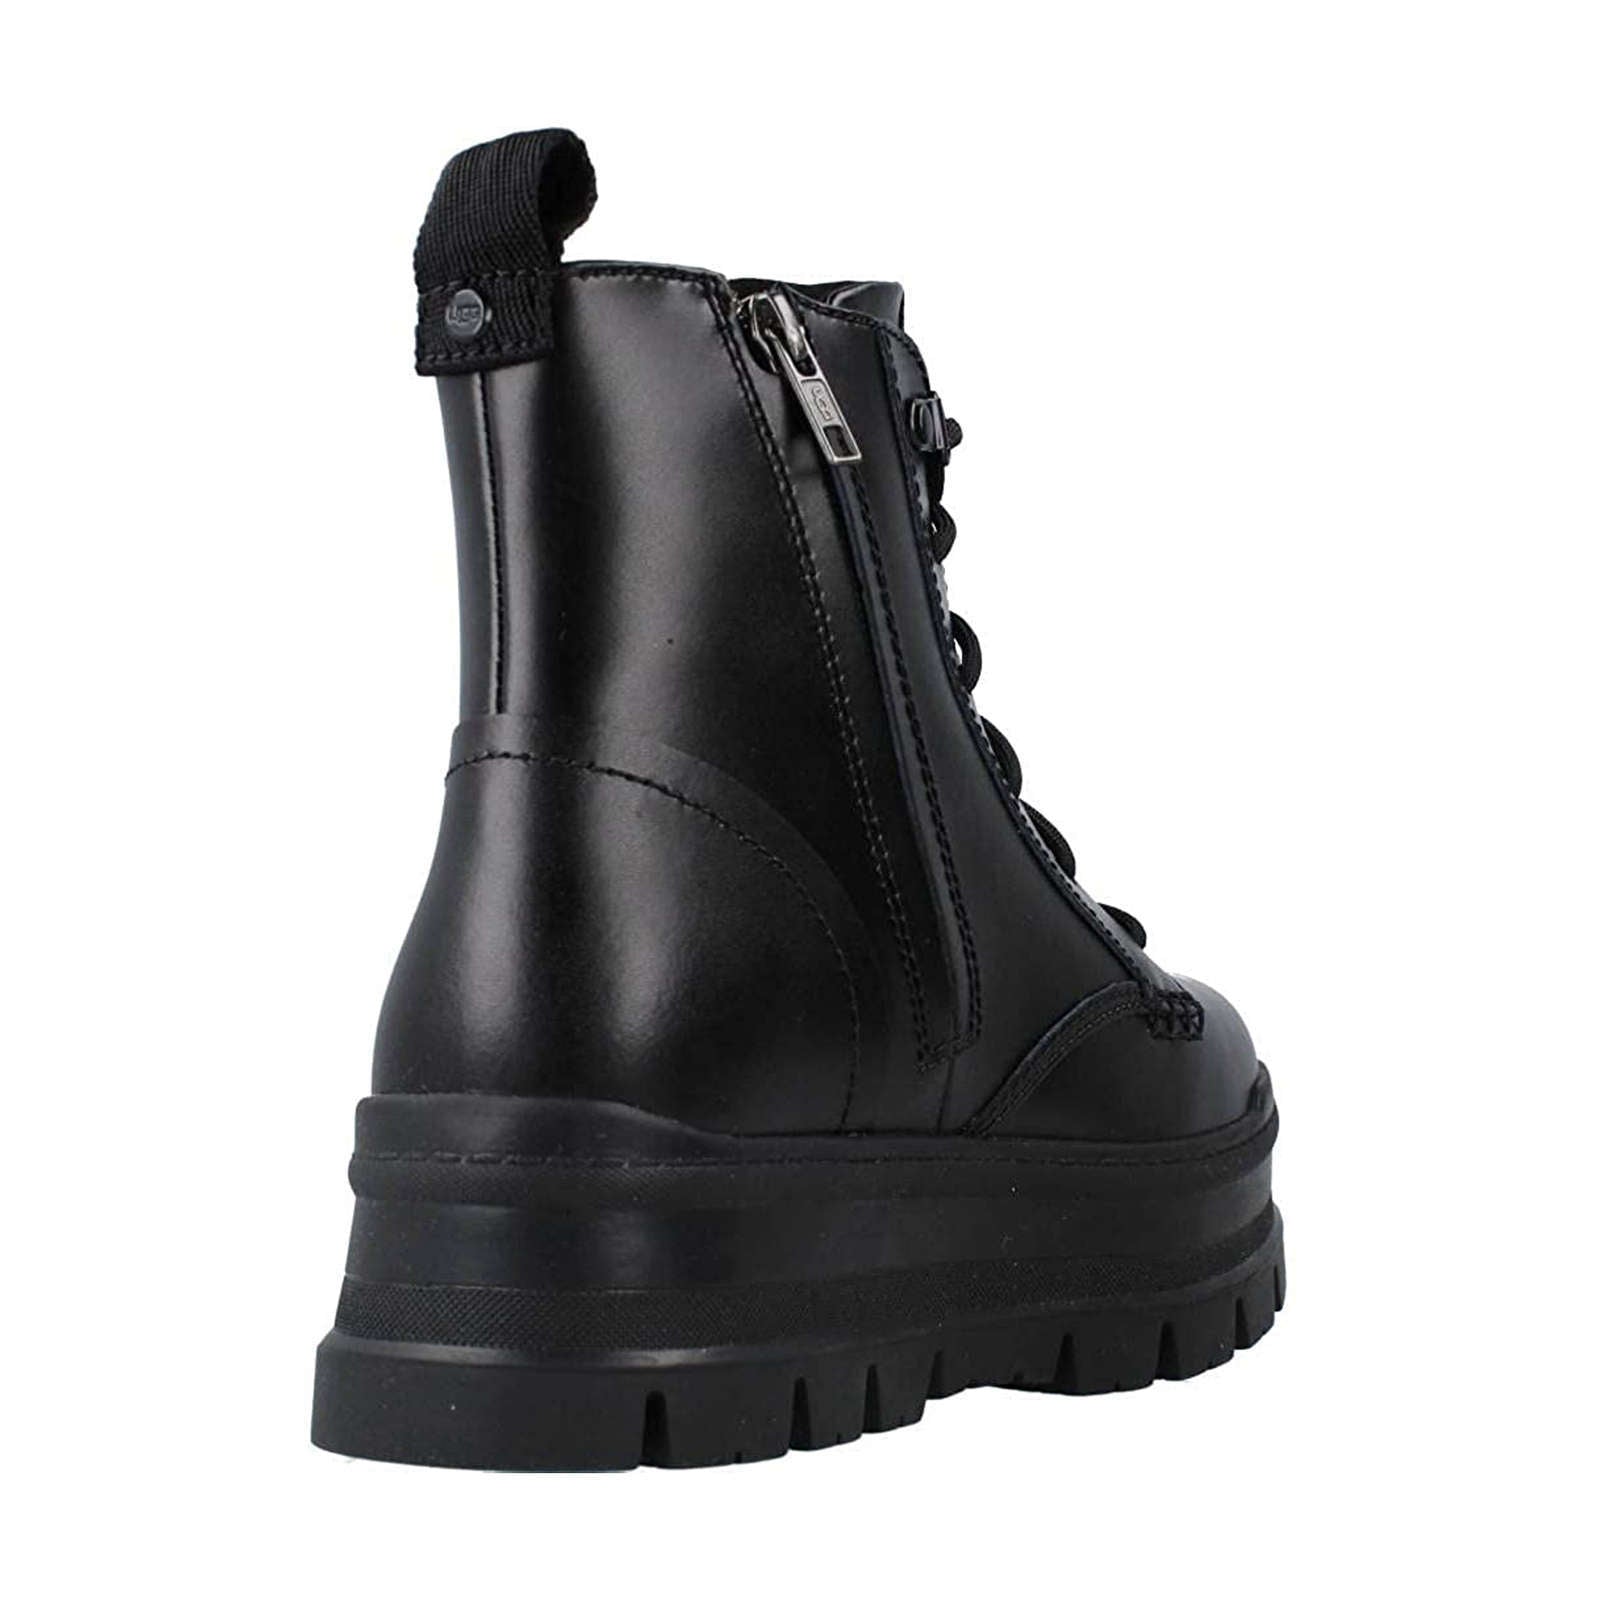 Sidnee Waterproof Leather Women's Platform Boots